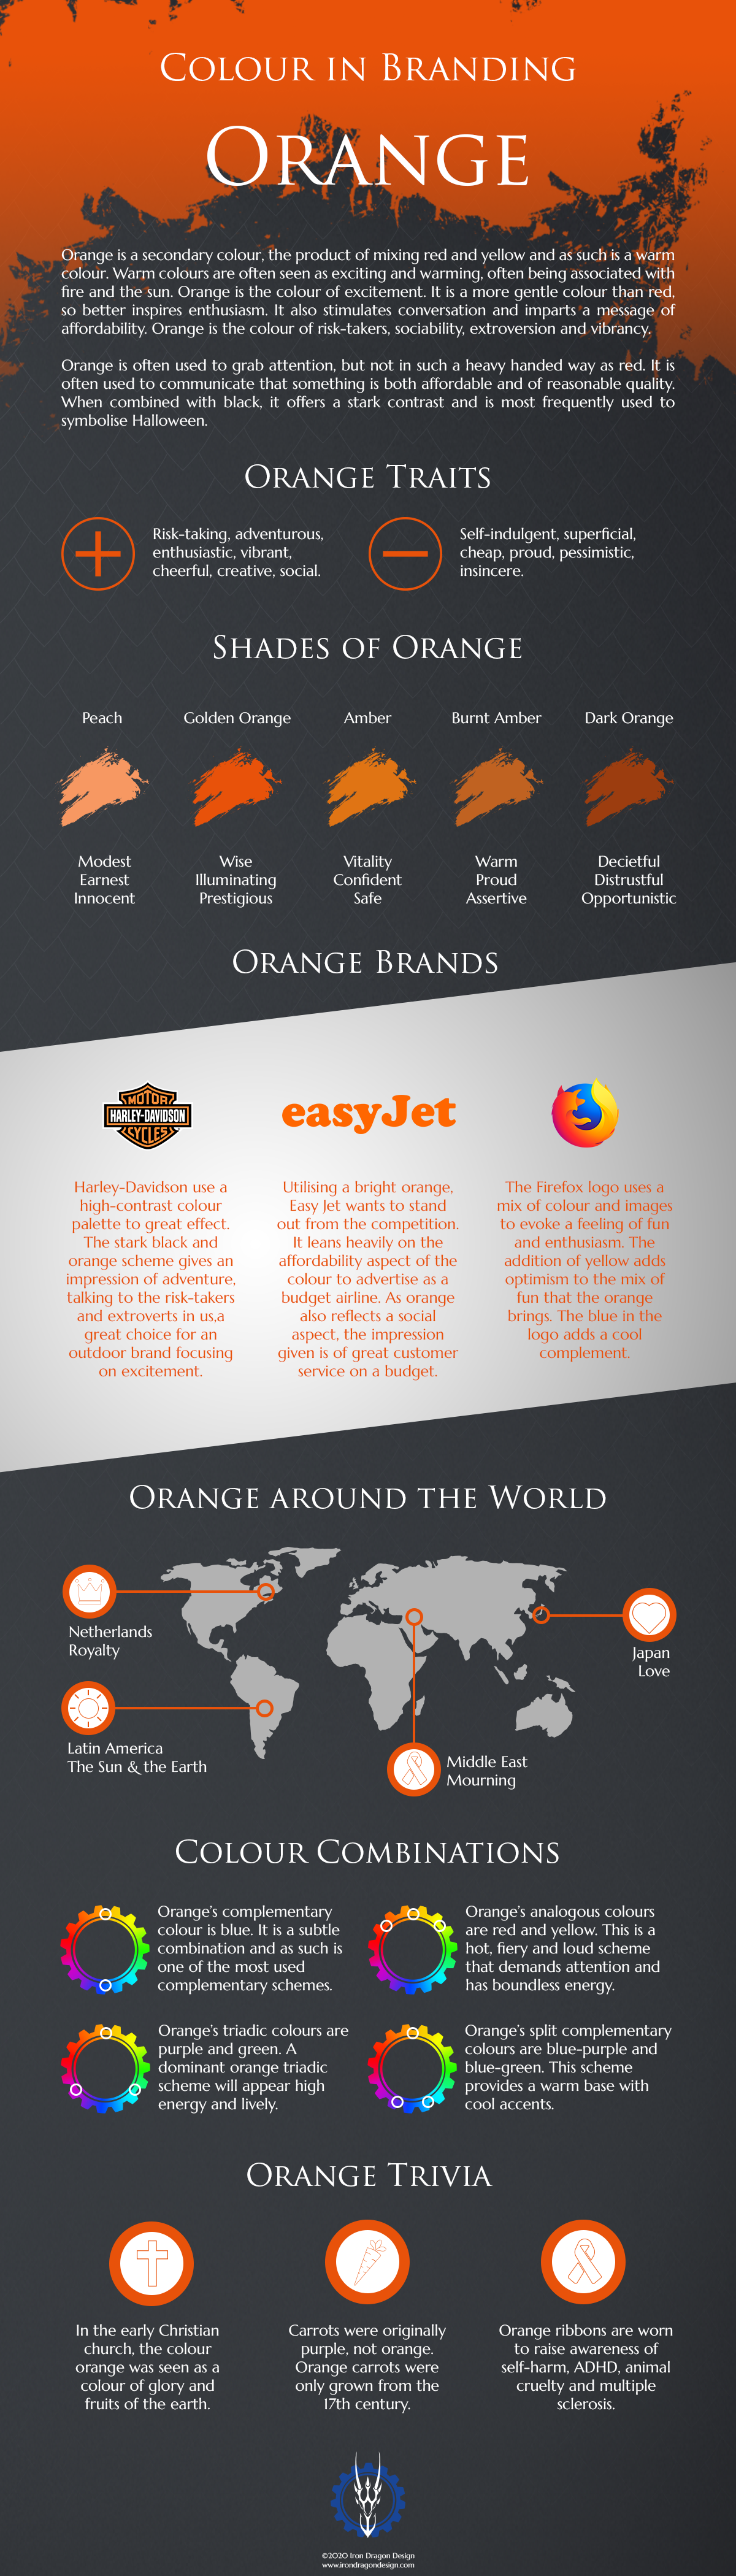 Colour in Branding Orange Infographic